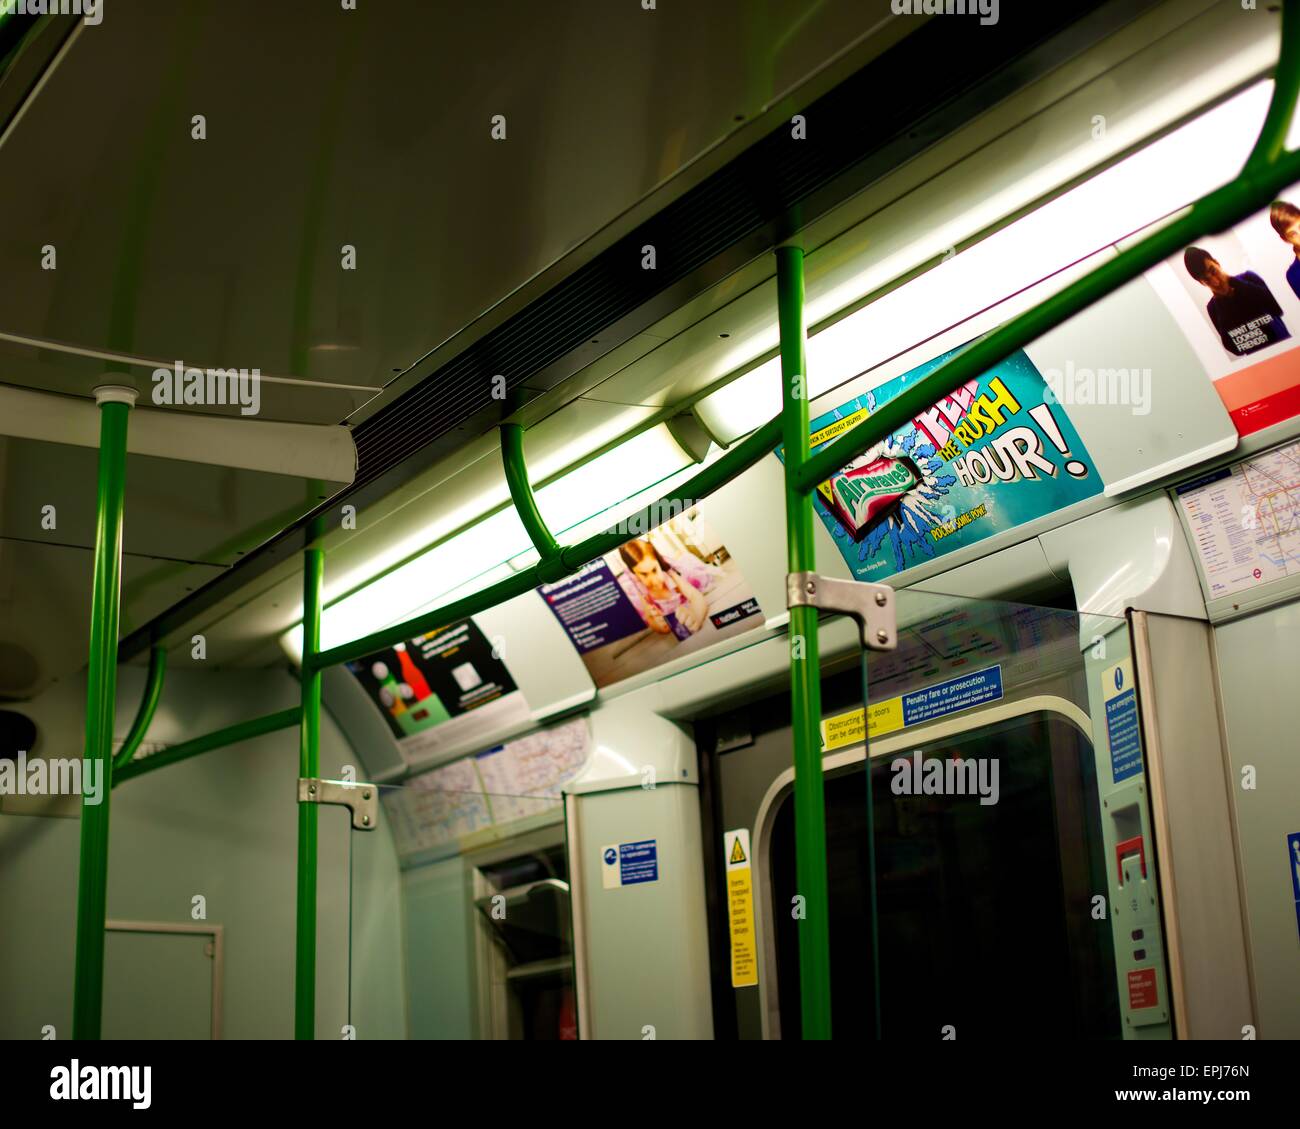 London Underground train Interior Stock Photo